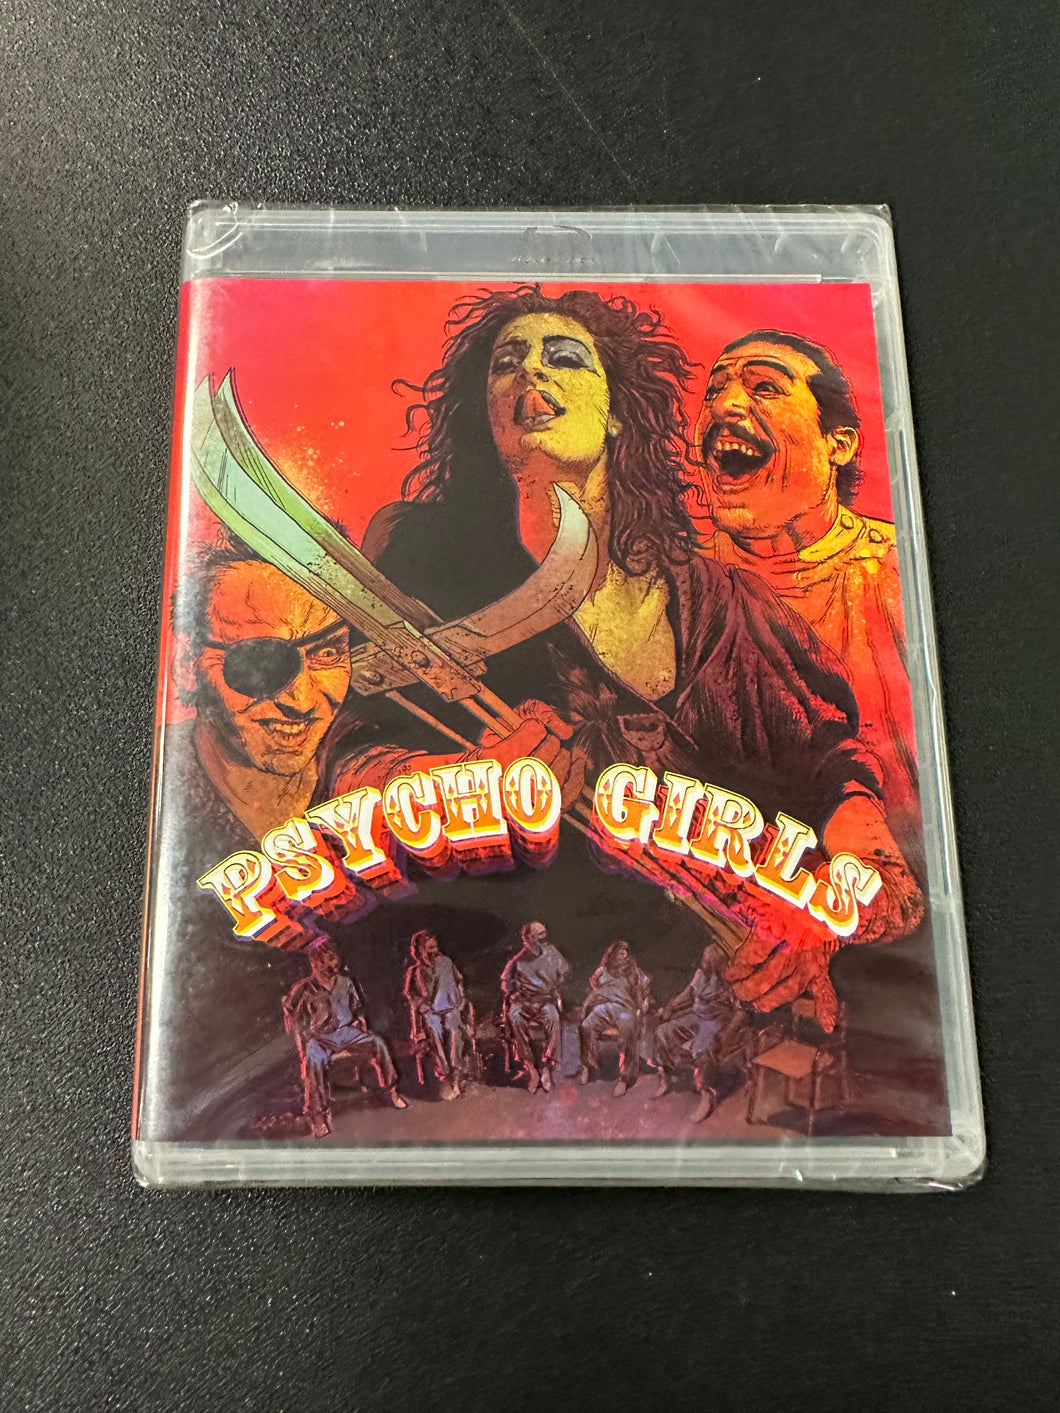 Physco Girls [Blu-Ray] (NEW) Sealed